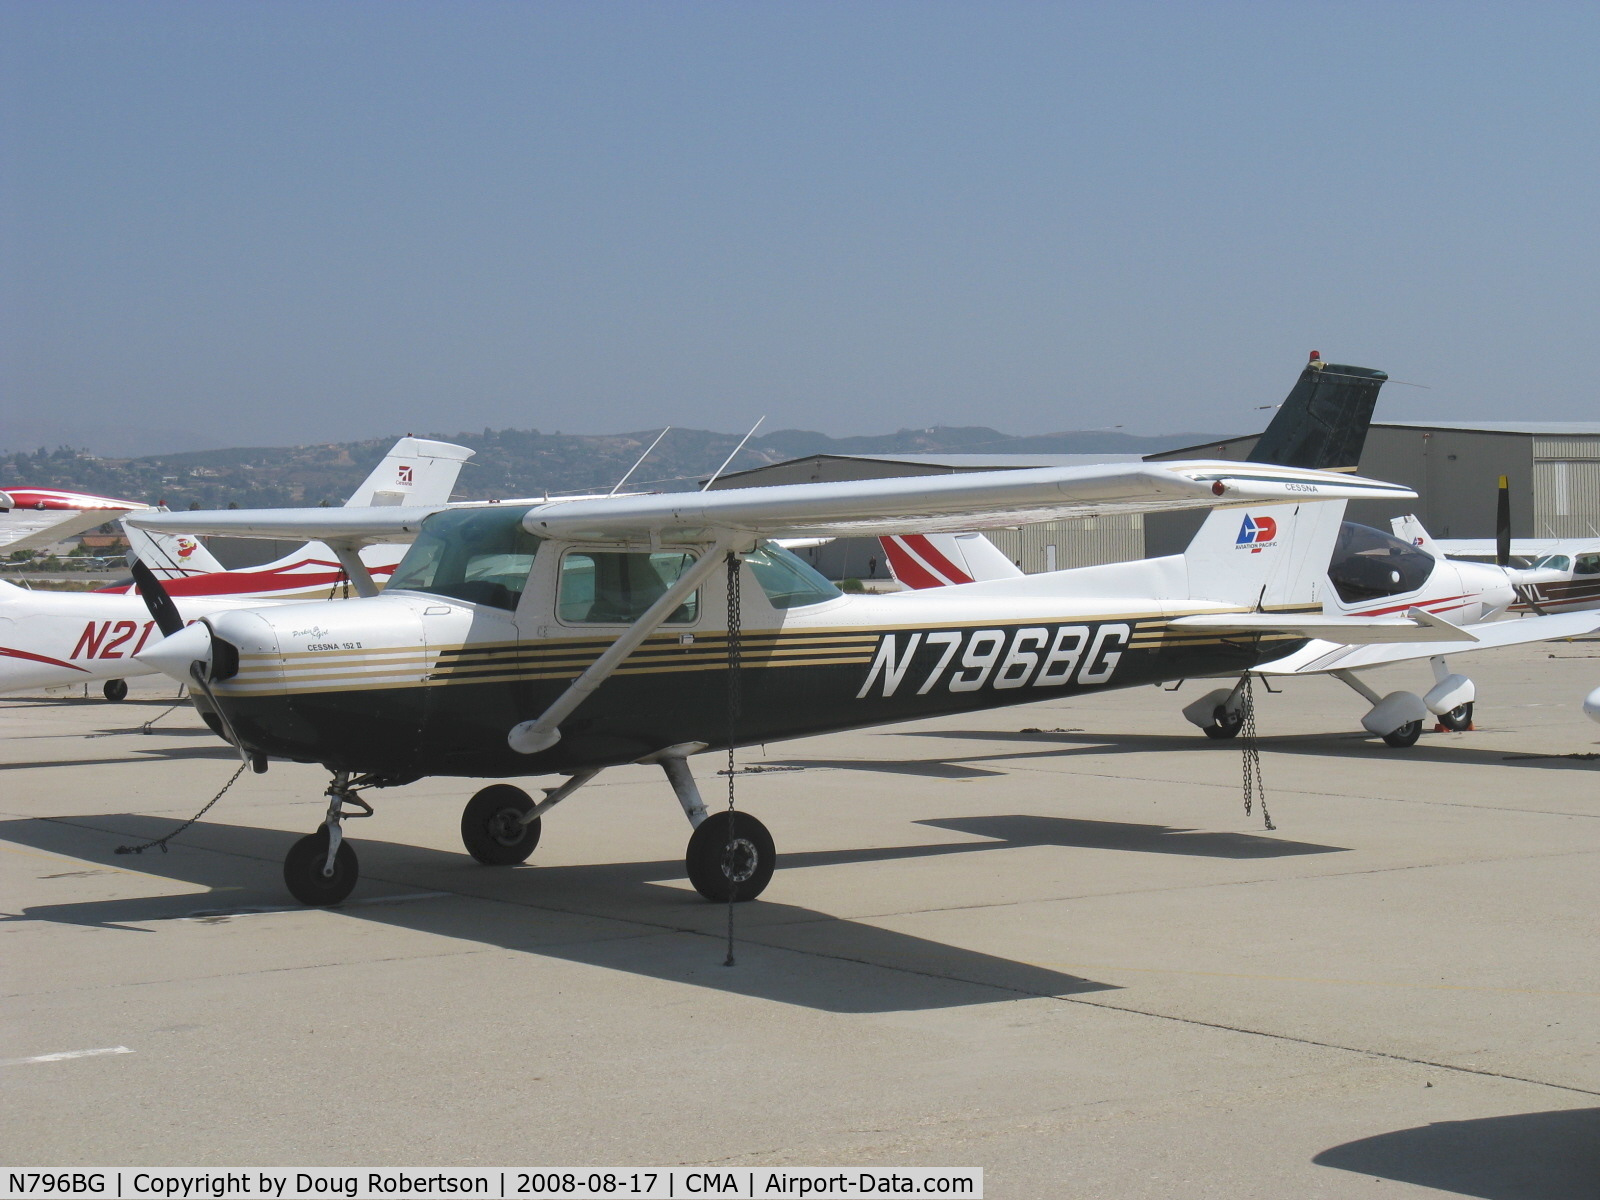 N796BG, Cessna 152 C/N 15280215, Cessna 152 II 'Perky Girl', Lycoming O-235-N2C 112 Hp